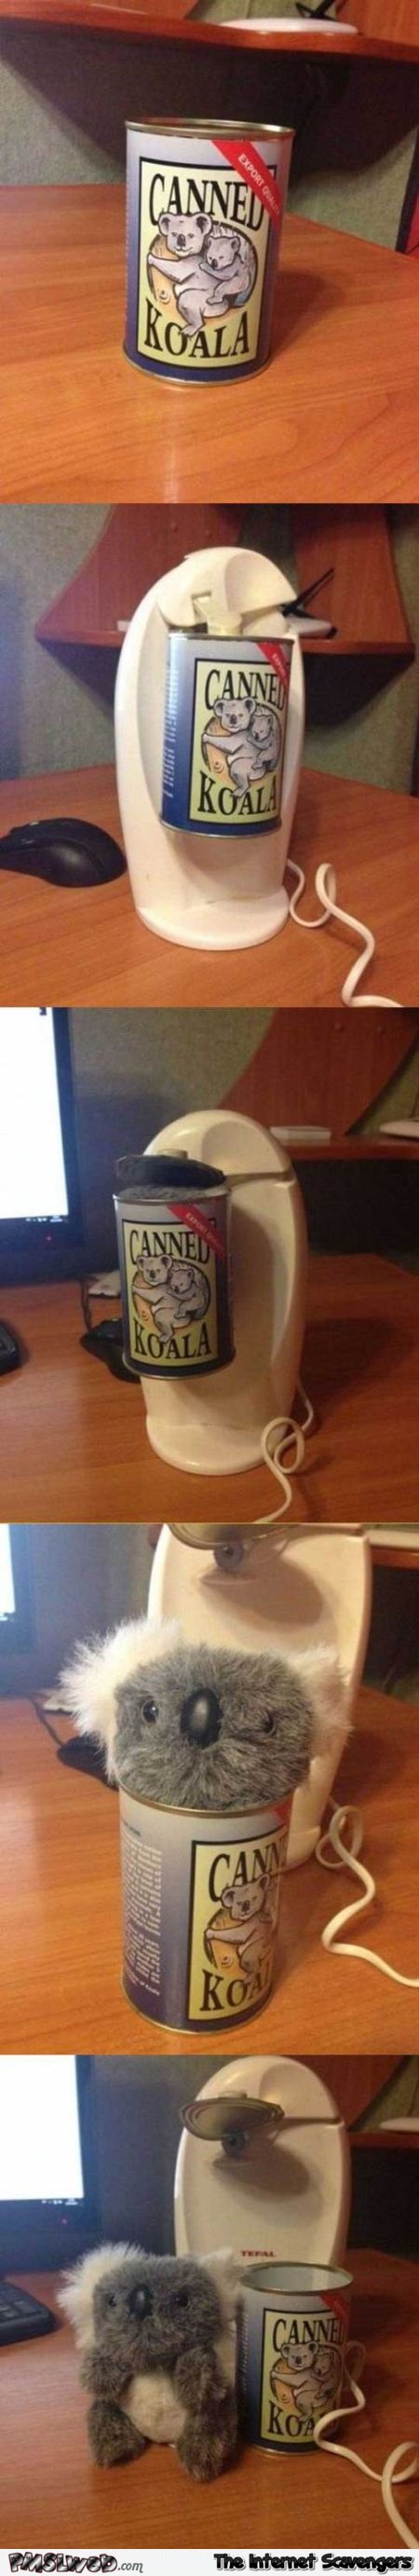 Canned koala humor at PMSLweb.com